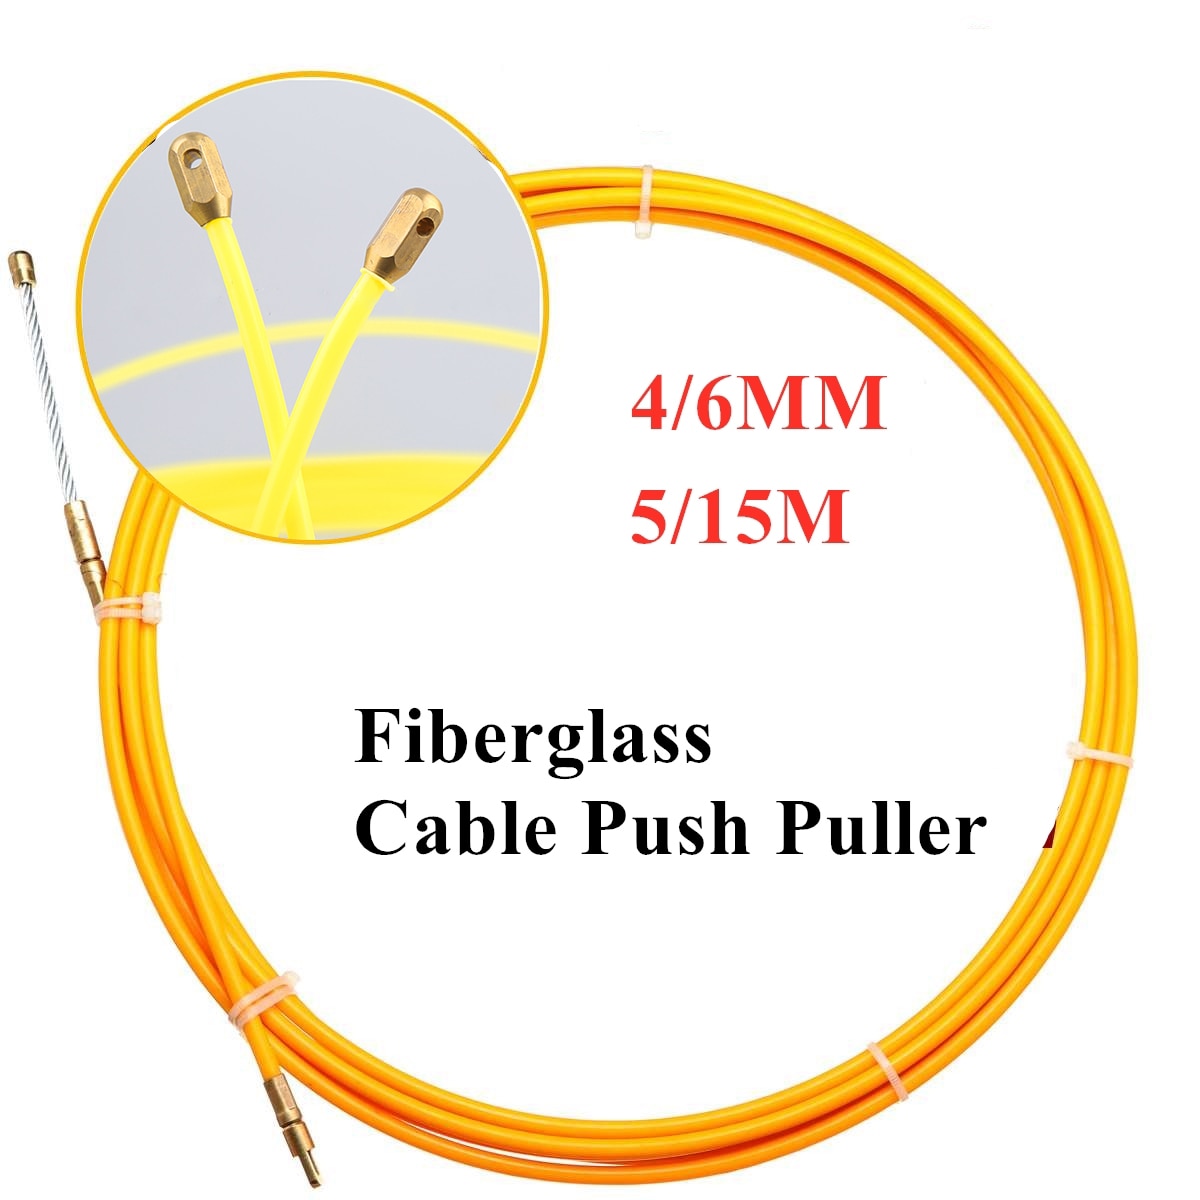 4/6Mm 5/15M Glasvezel Kabel Push Puller Running Cable Kit Muur Elektrische Kabel Installeren staven Bedrading Accessoires Duurzaam